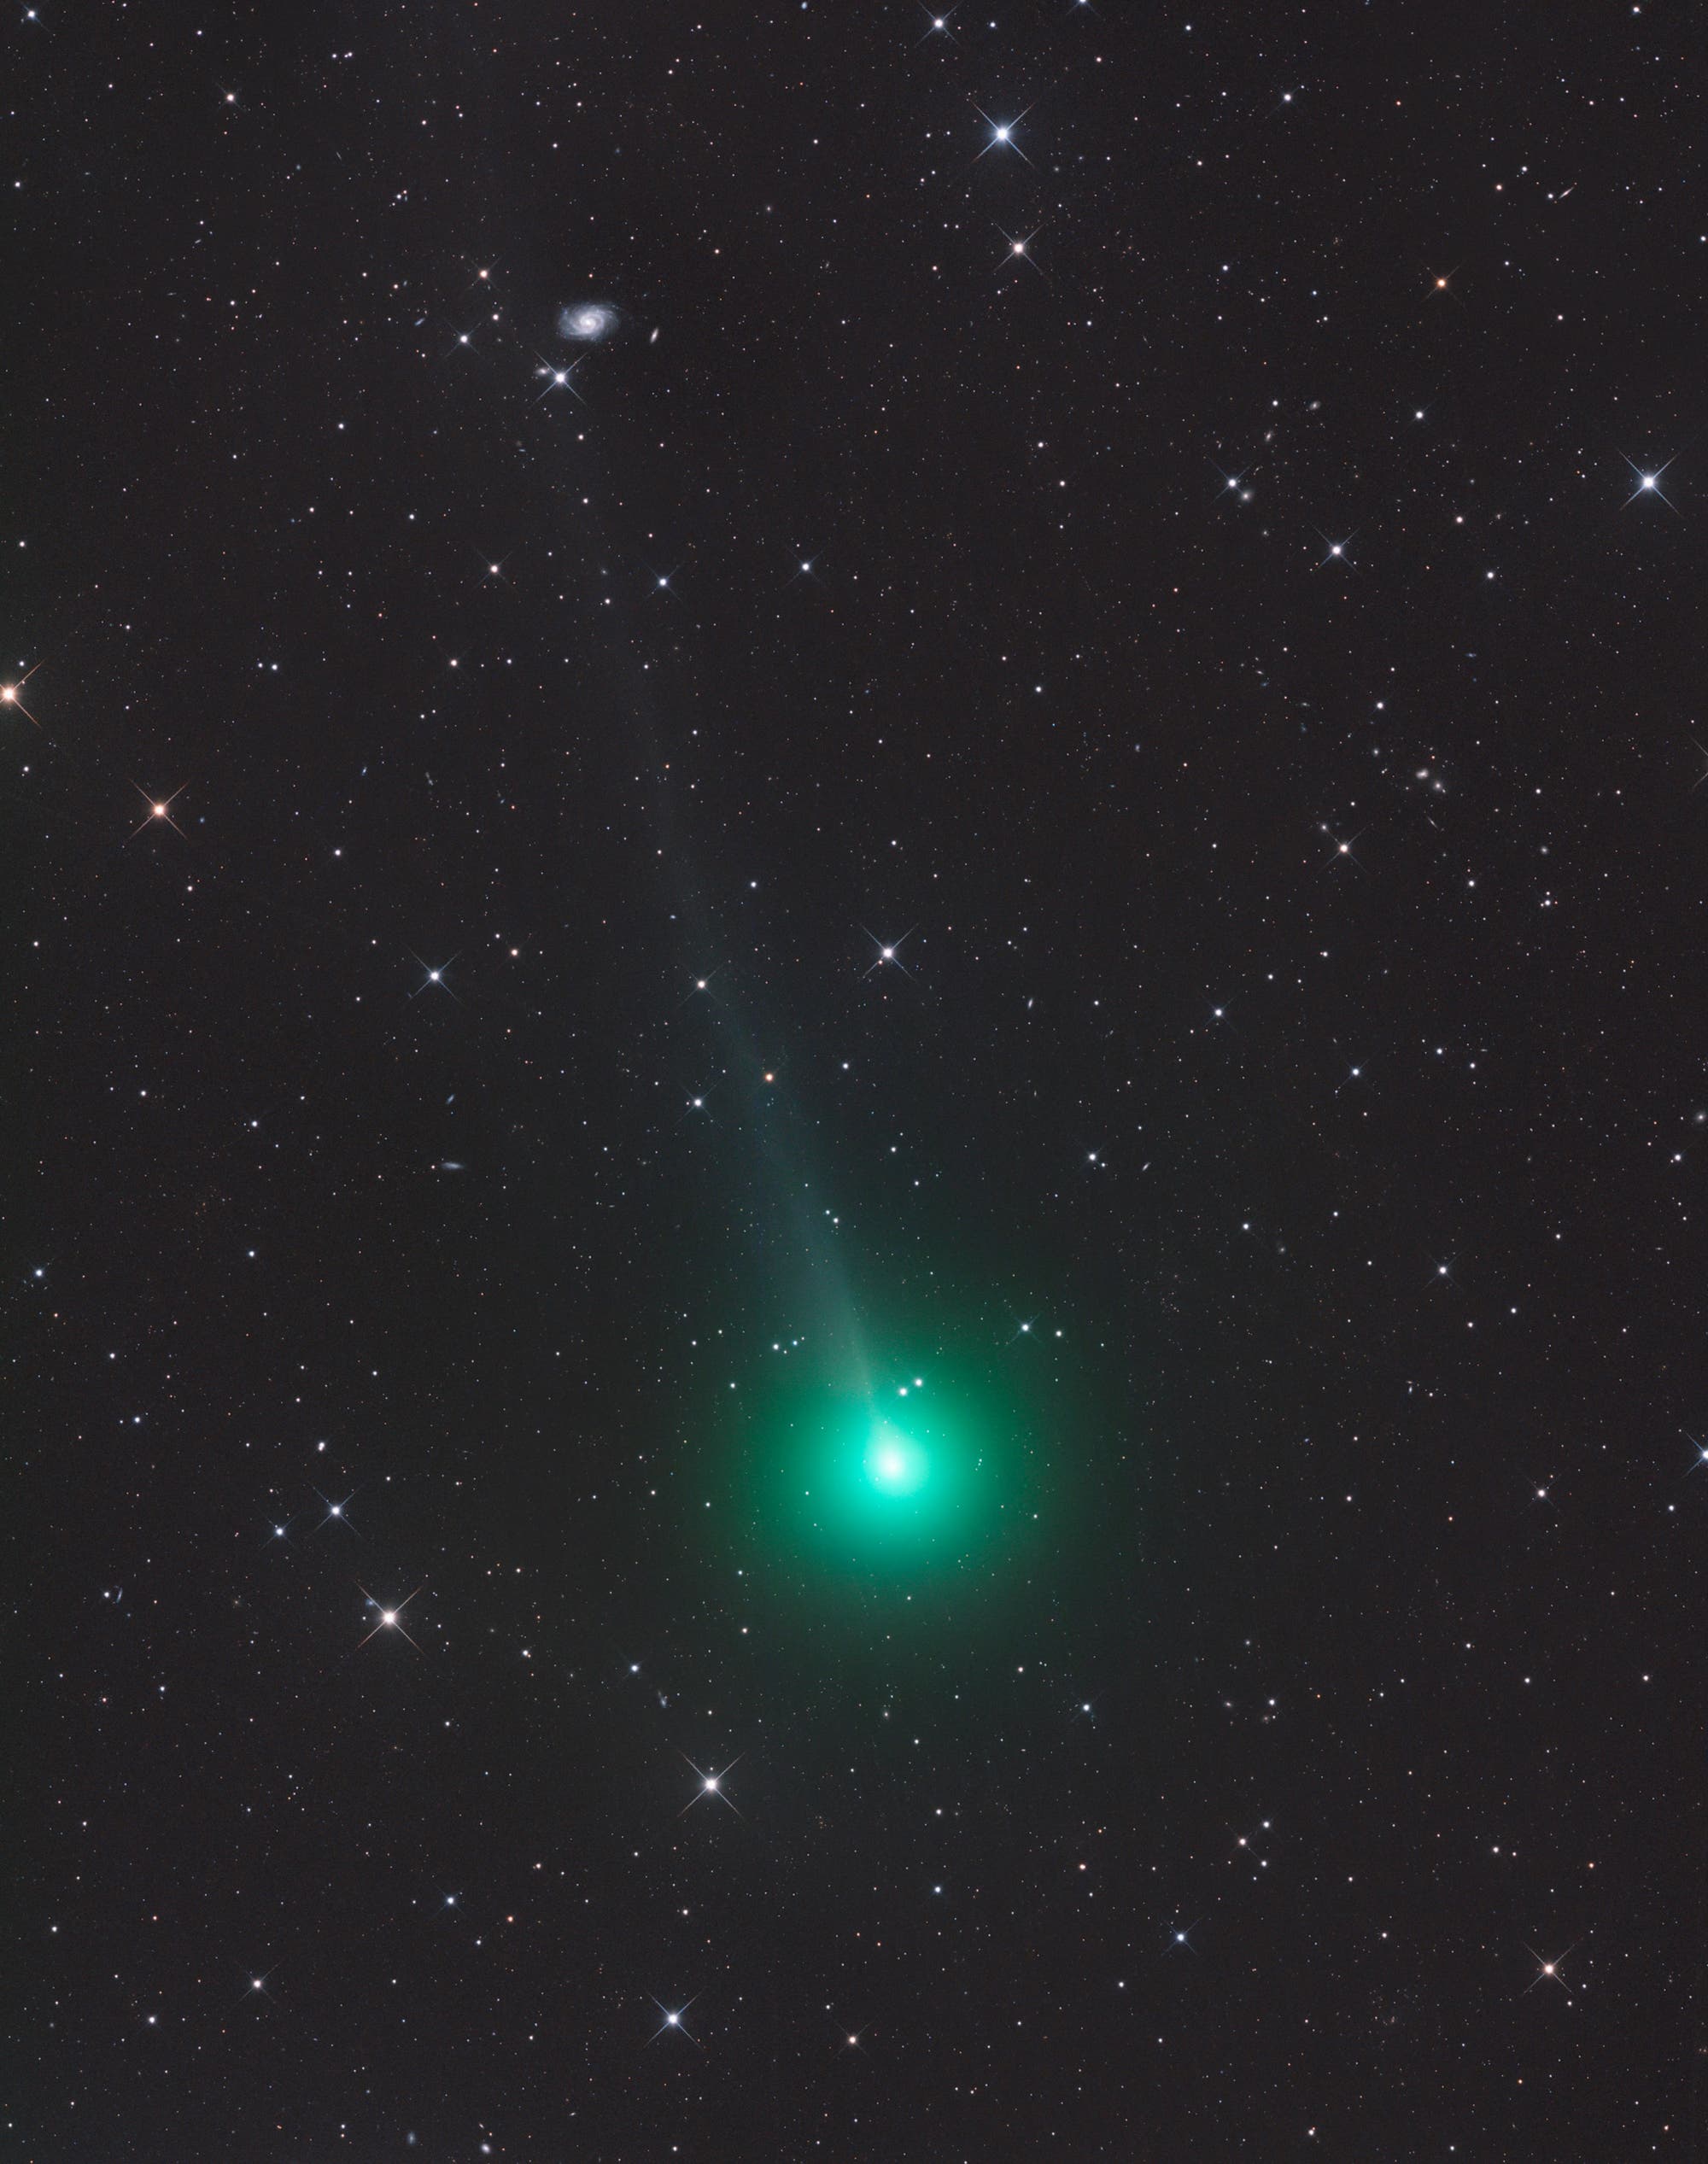 Komet 62P/Tsuchinshan